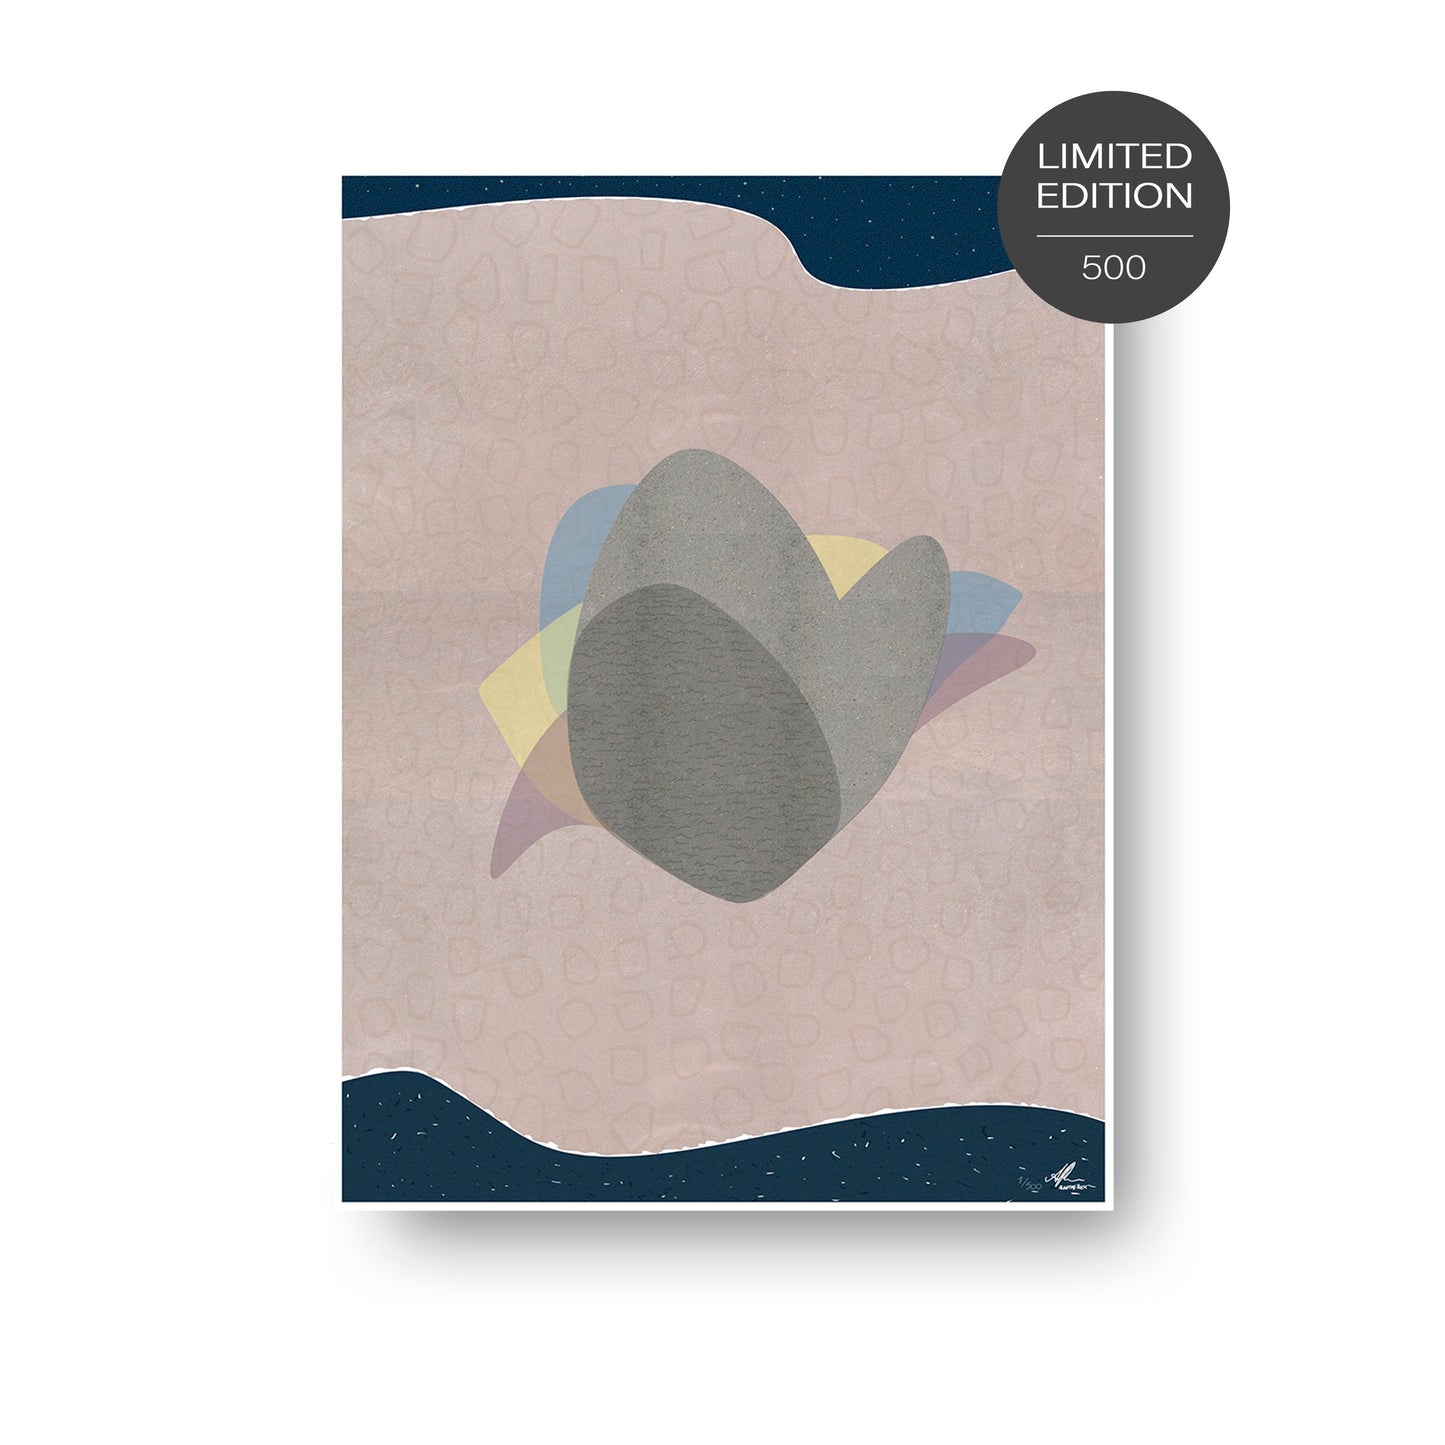 NOKUKO - Art - Alan Pedersen - ALANTHEROCK - Vibrant solidity - Limited edition 500 - print